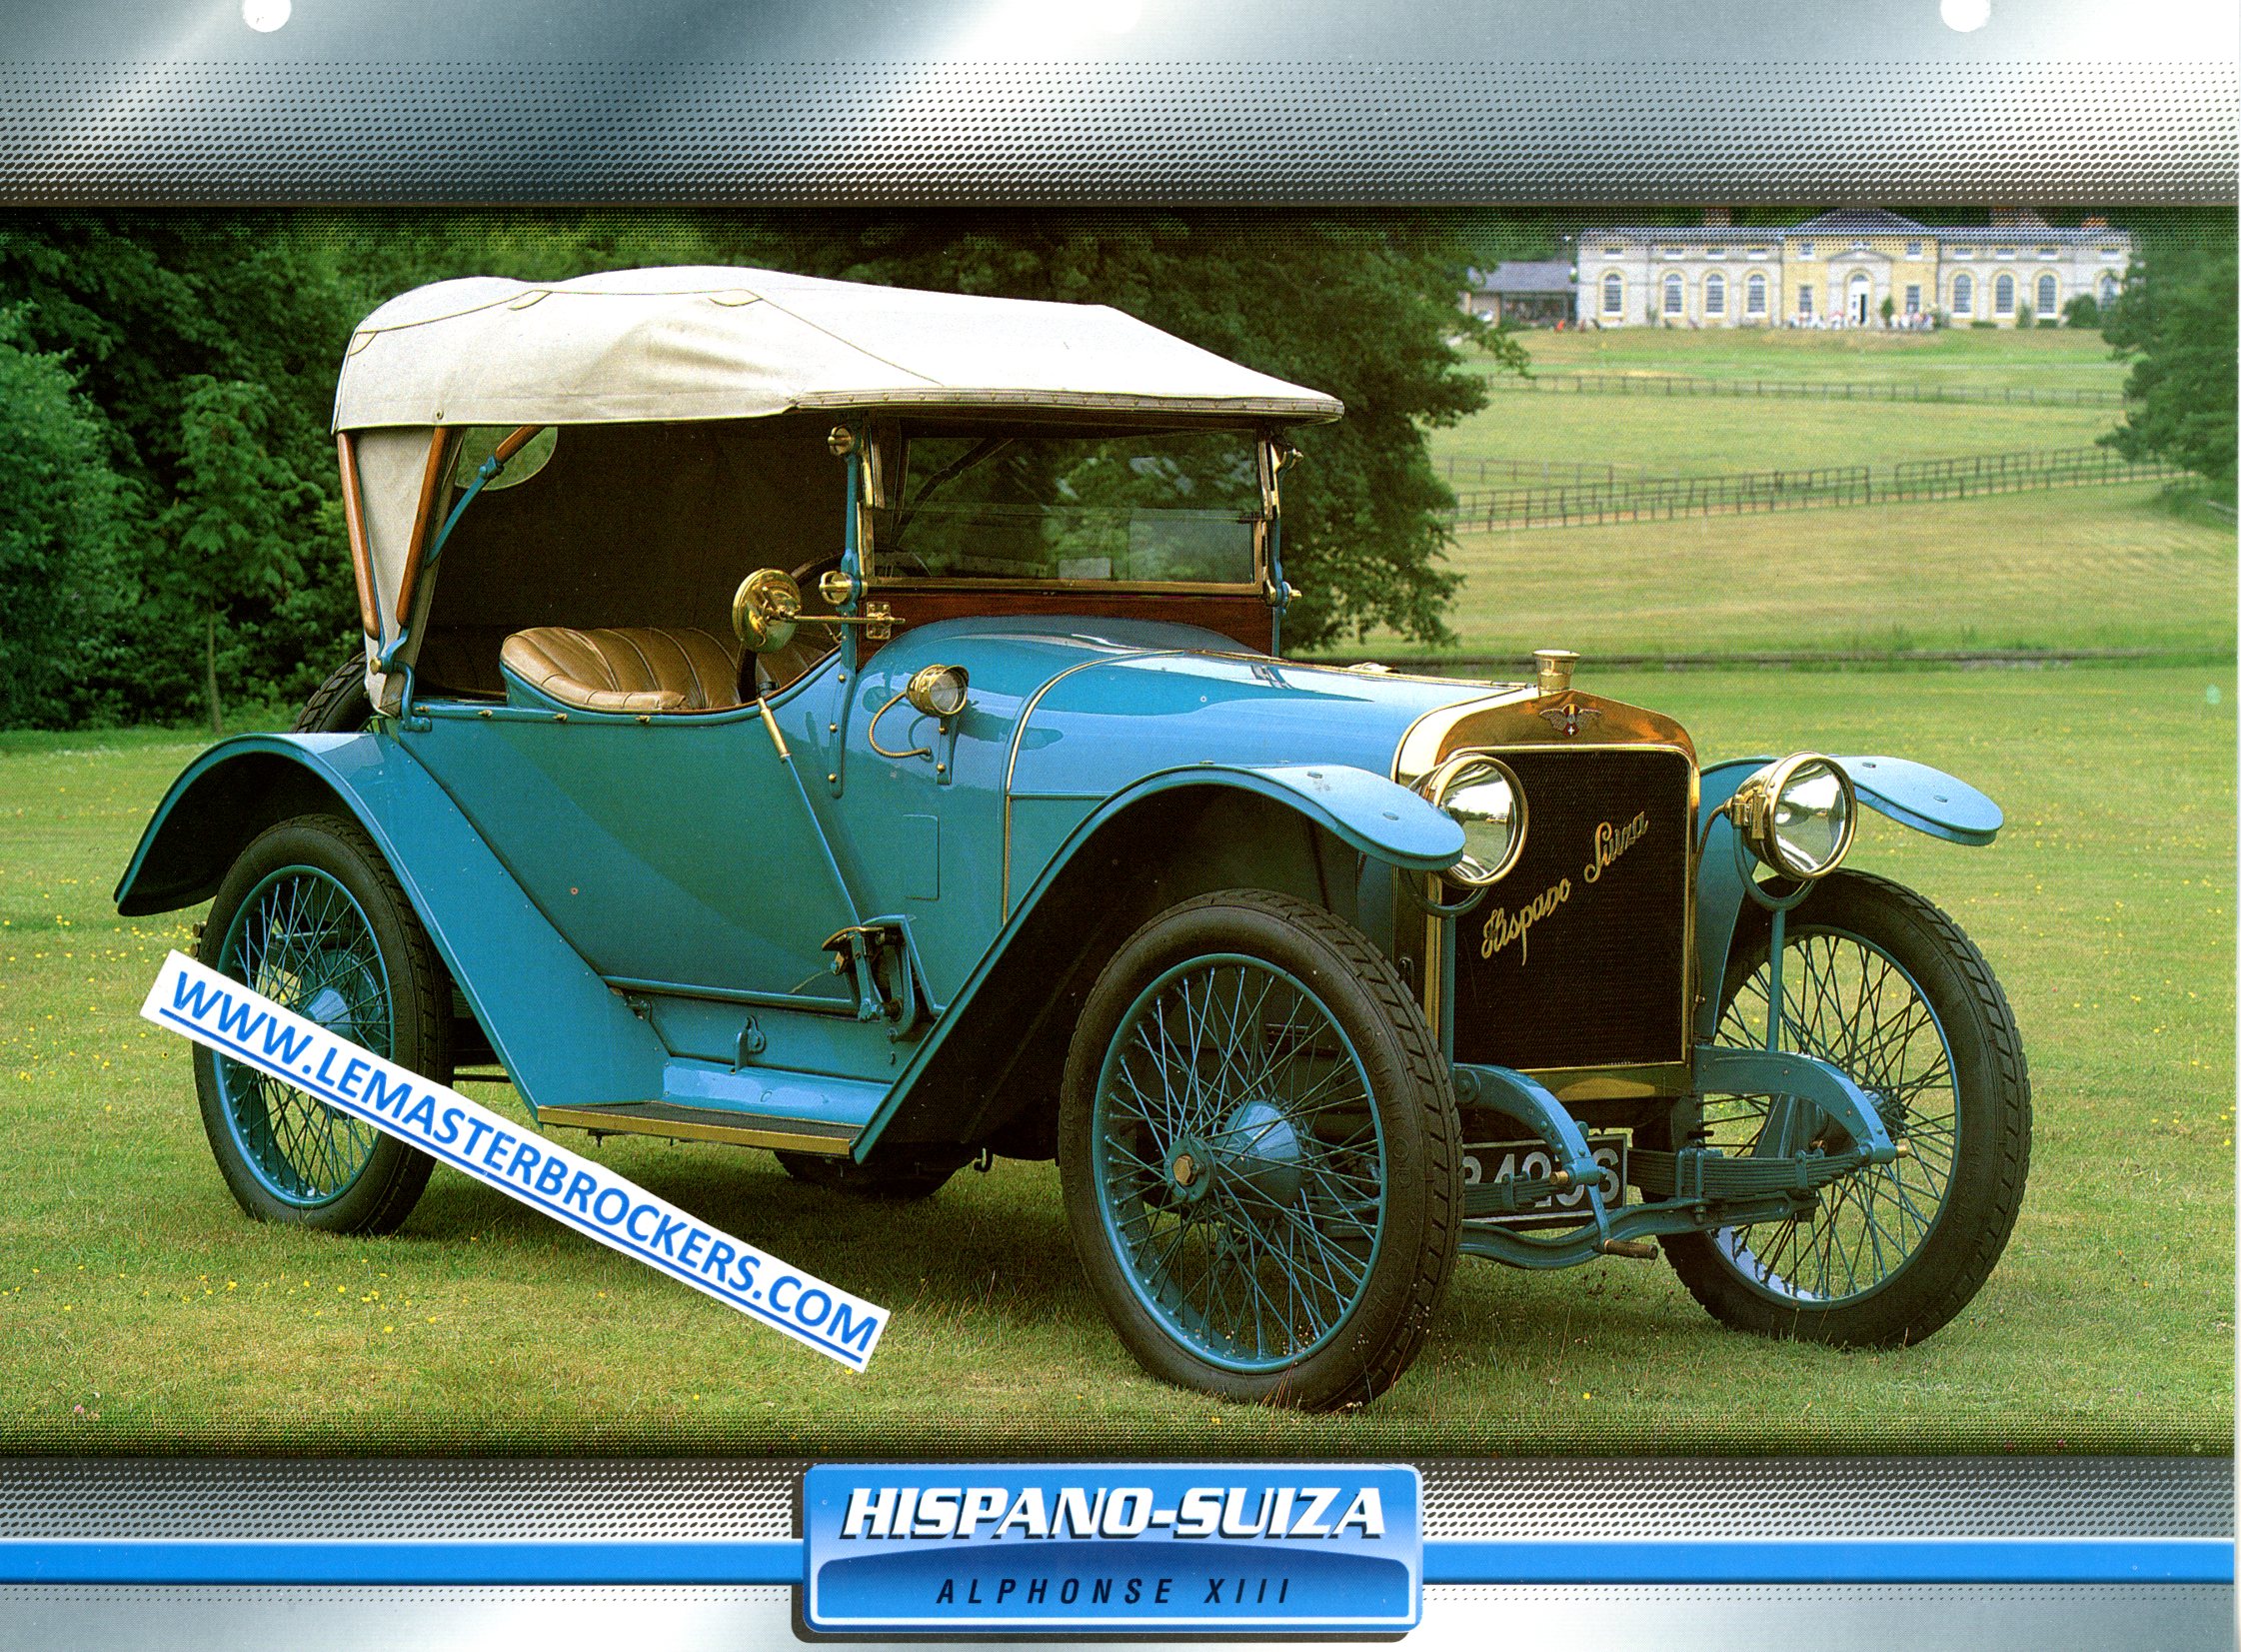 HISPANO-SUIZA ALPHONSE XIII 1912 FICHE LITTÉRATURE AUTOMOBILE